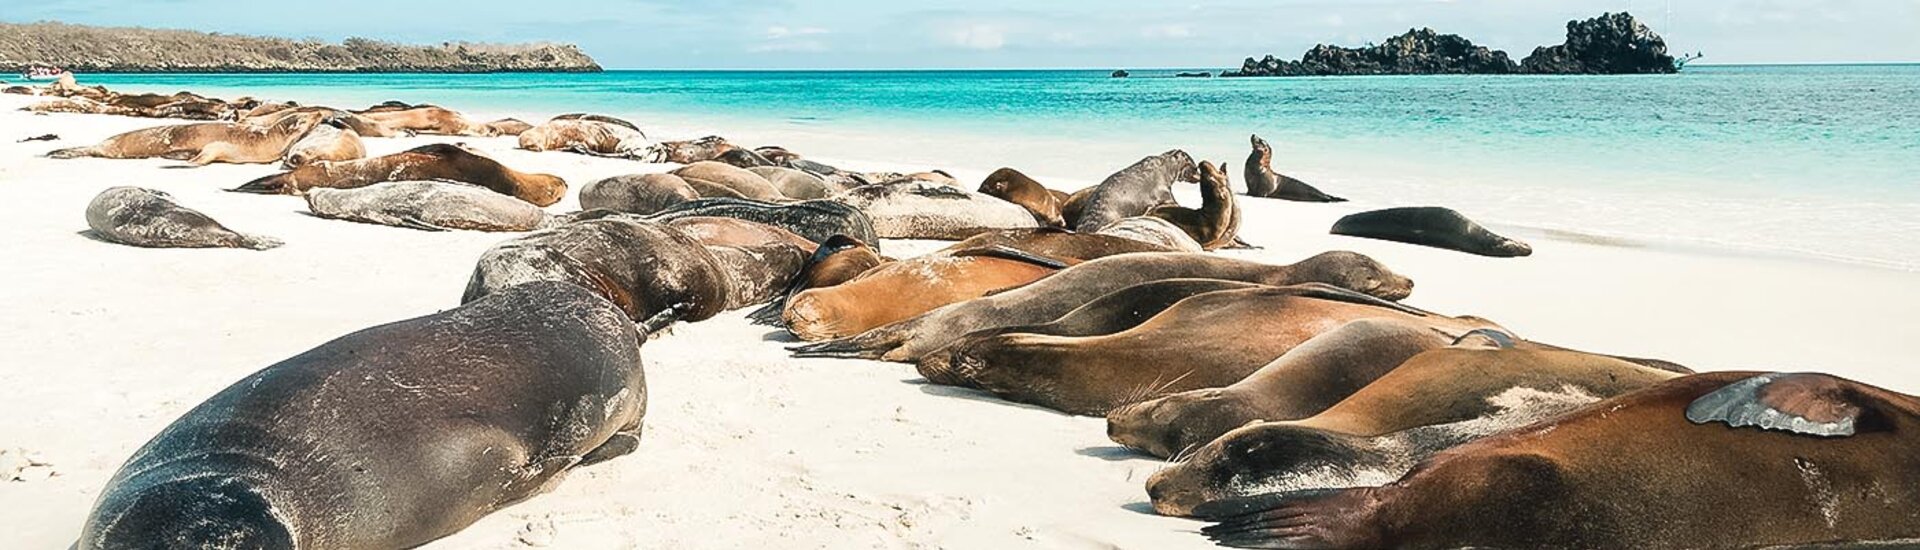 Eine Seelöwenkolonie am Strand der Insel Espanola, Galapagosinseln, Ecuador